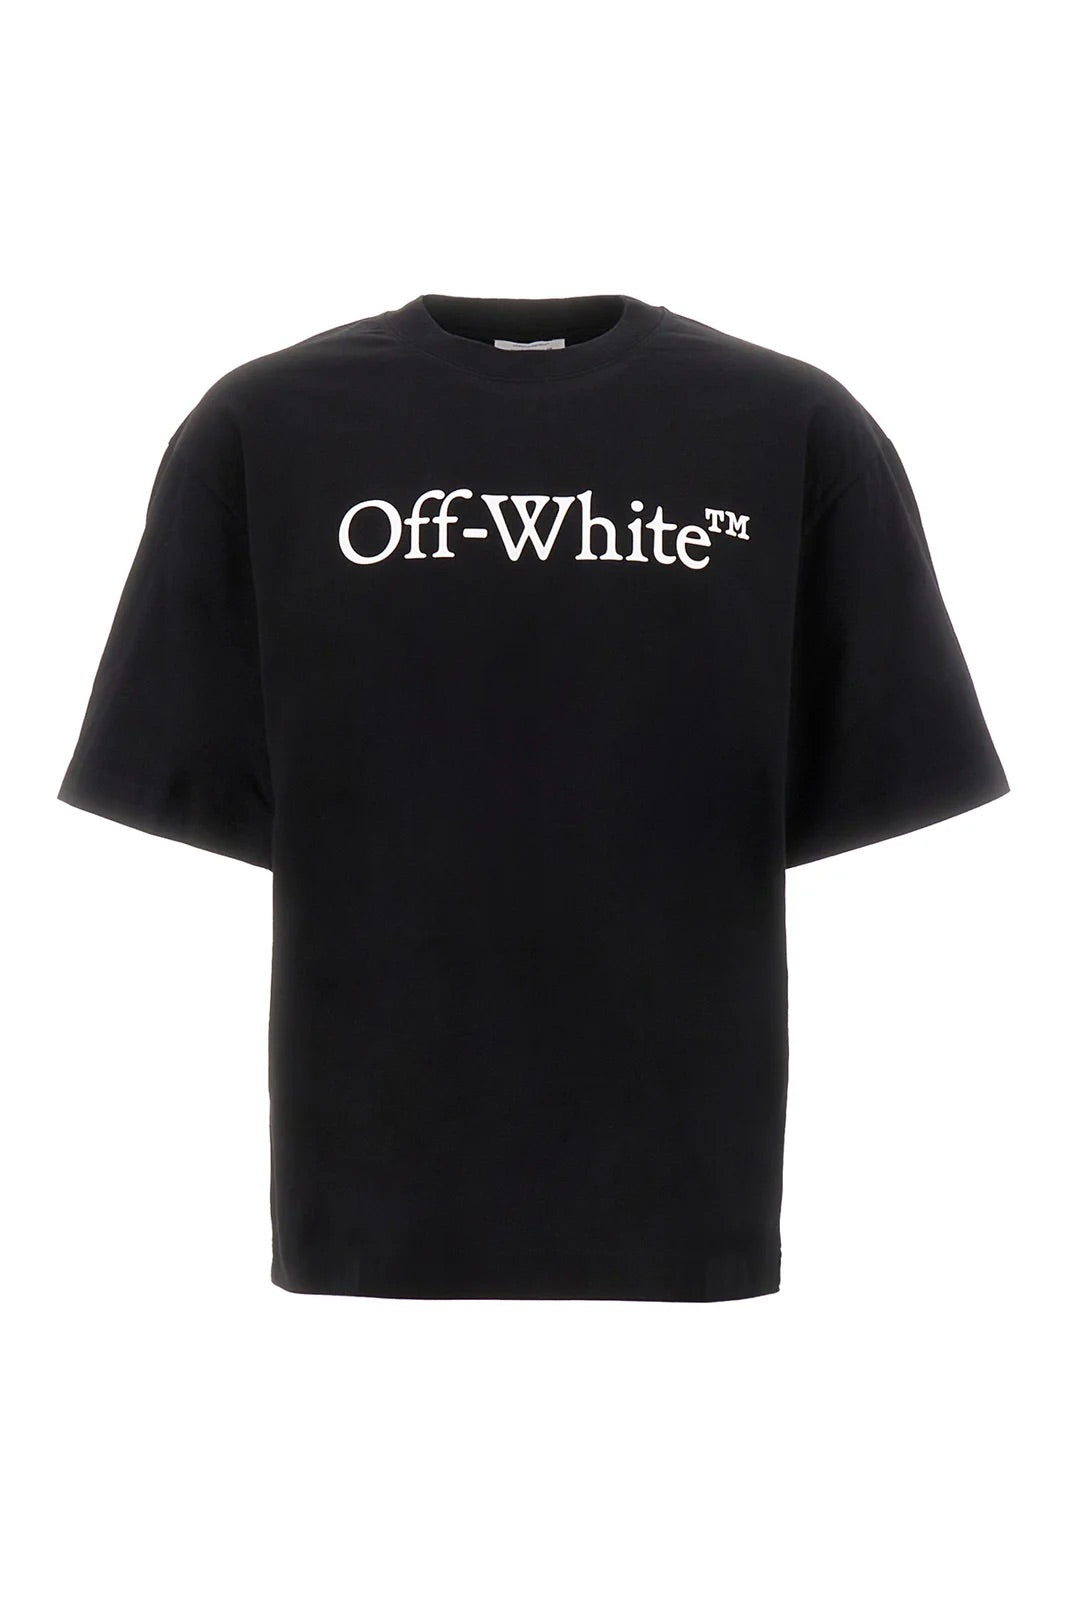 OFF WHITE CLASSIC LOGO T-SHIRT BLACK